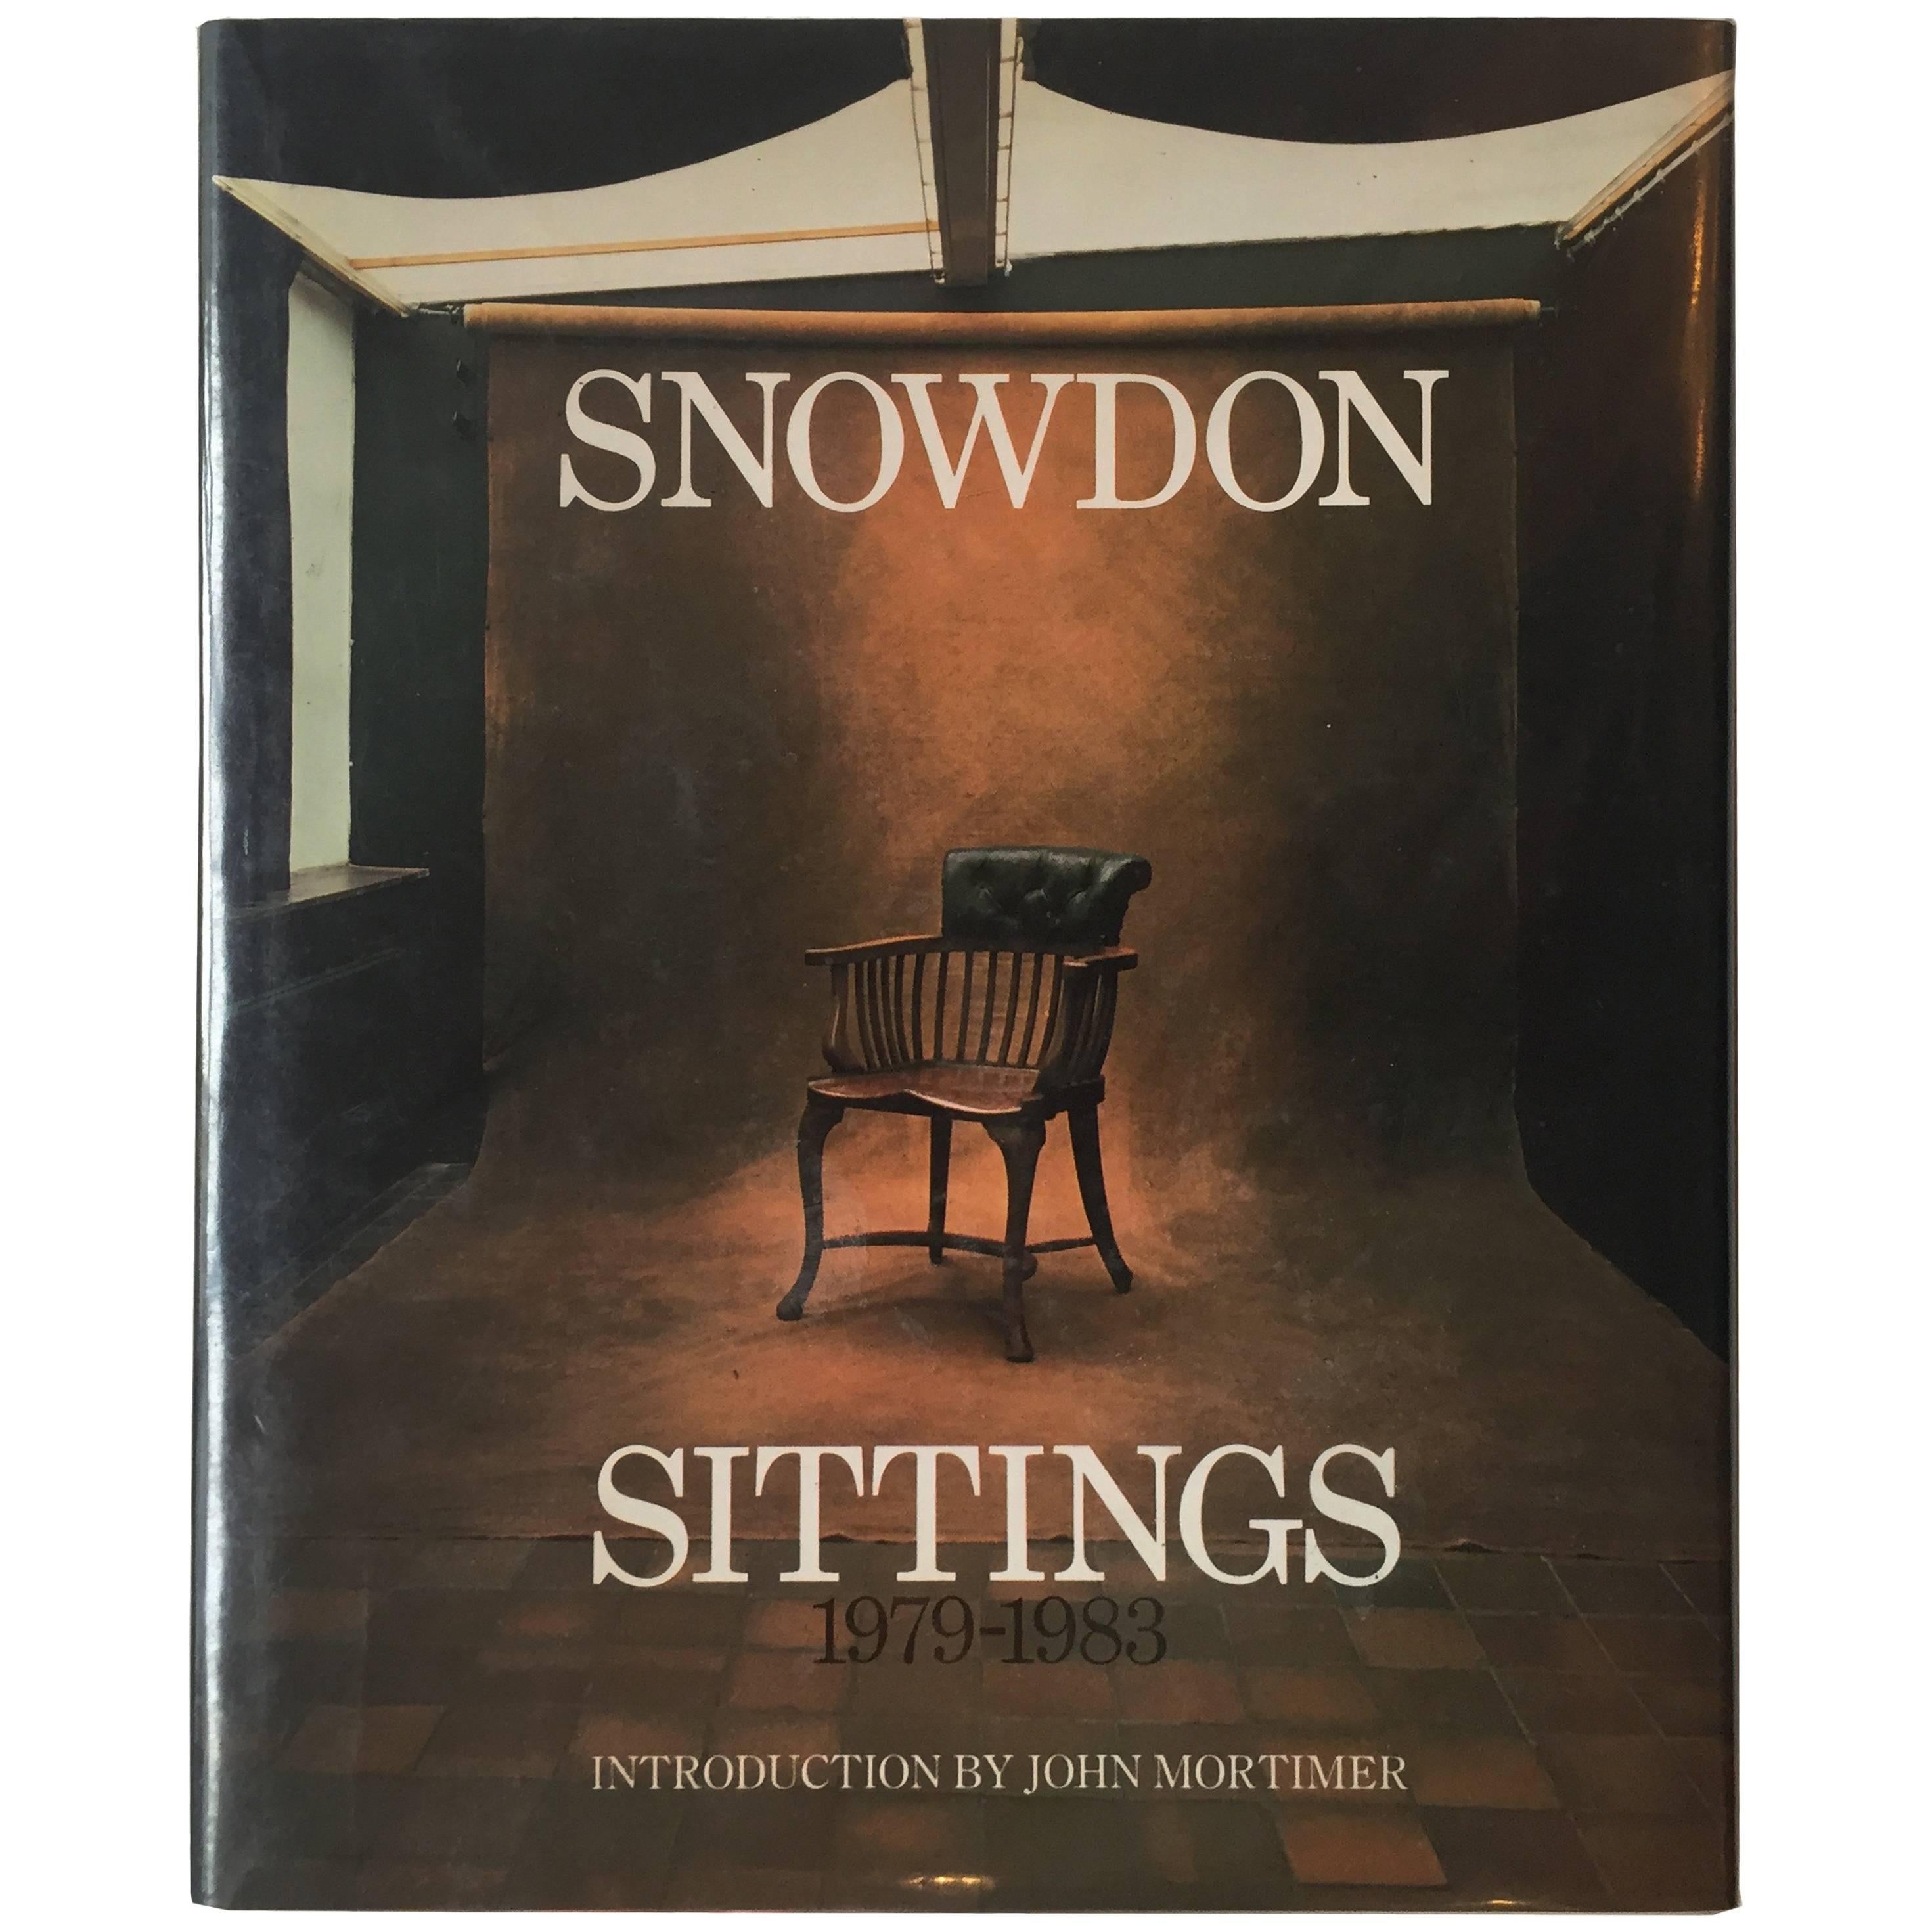 Snowdon Sittings, 1979-1983